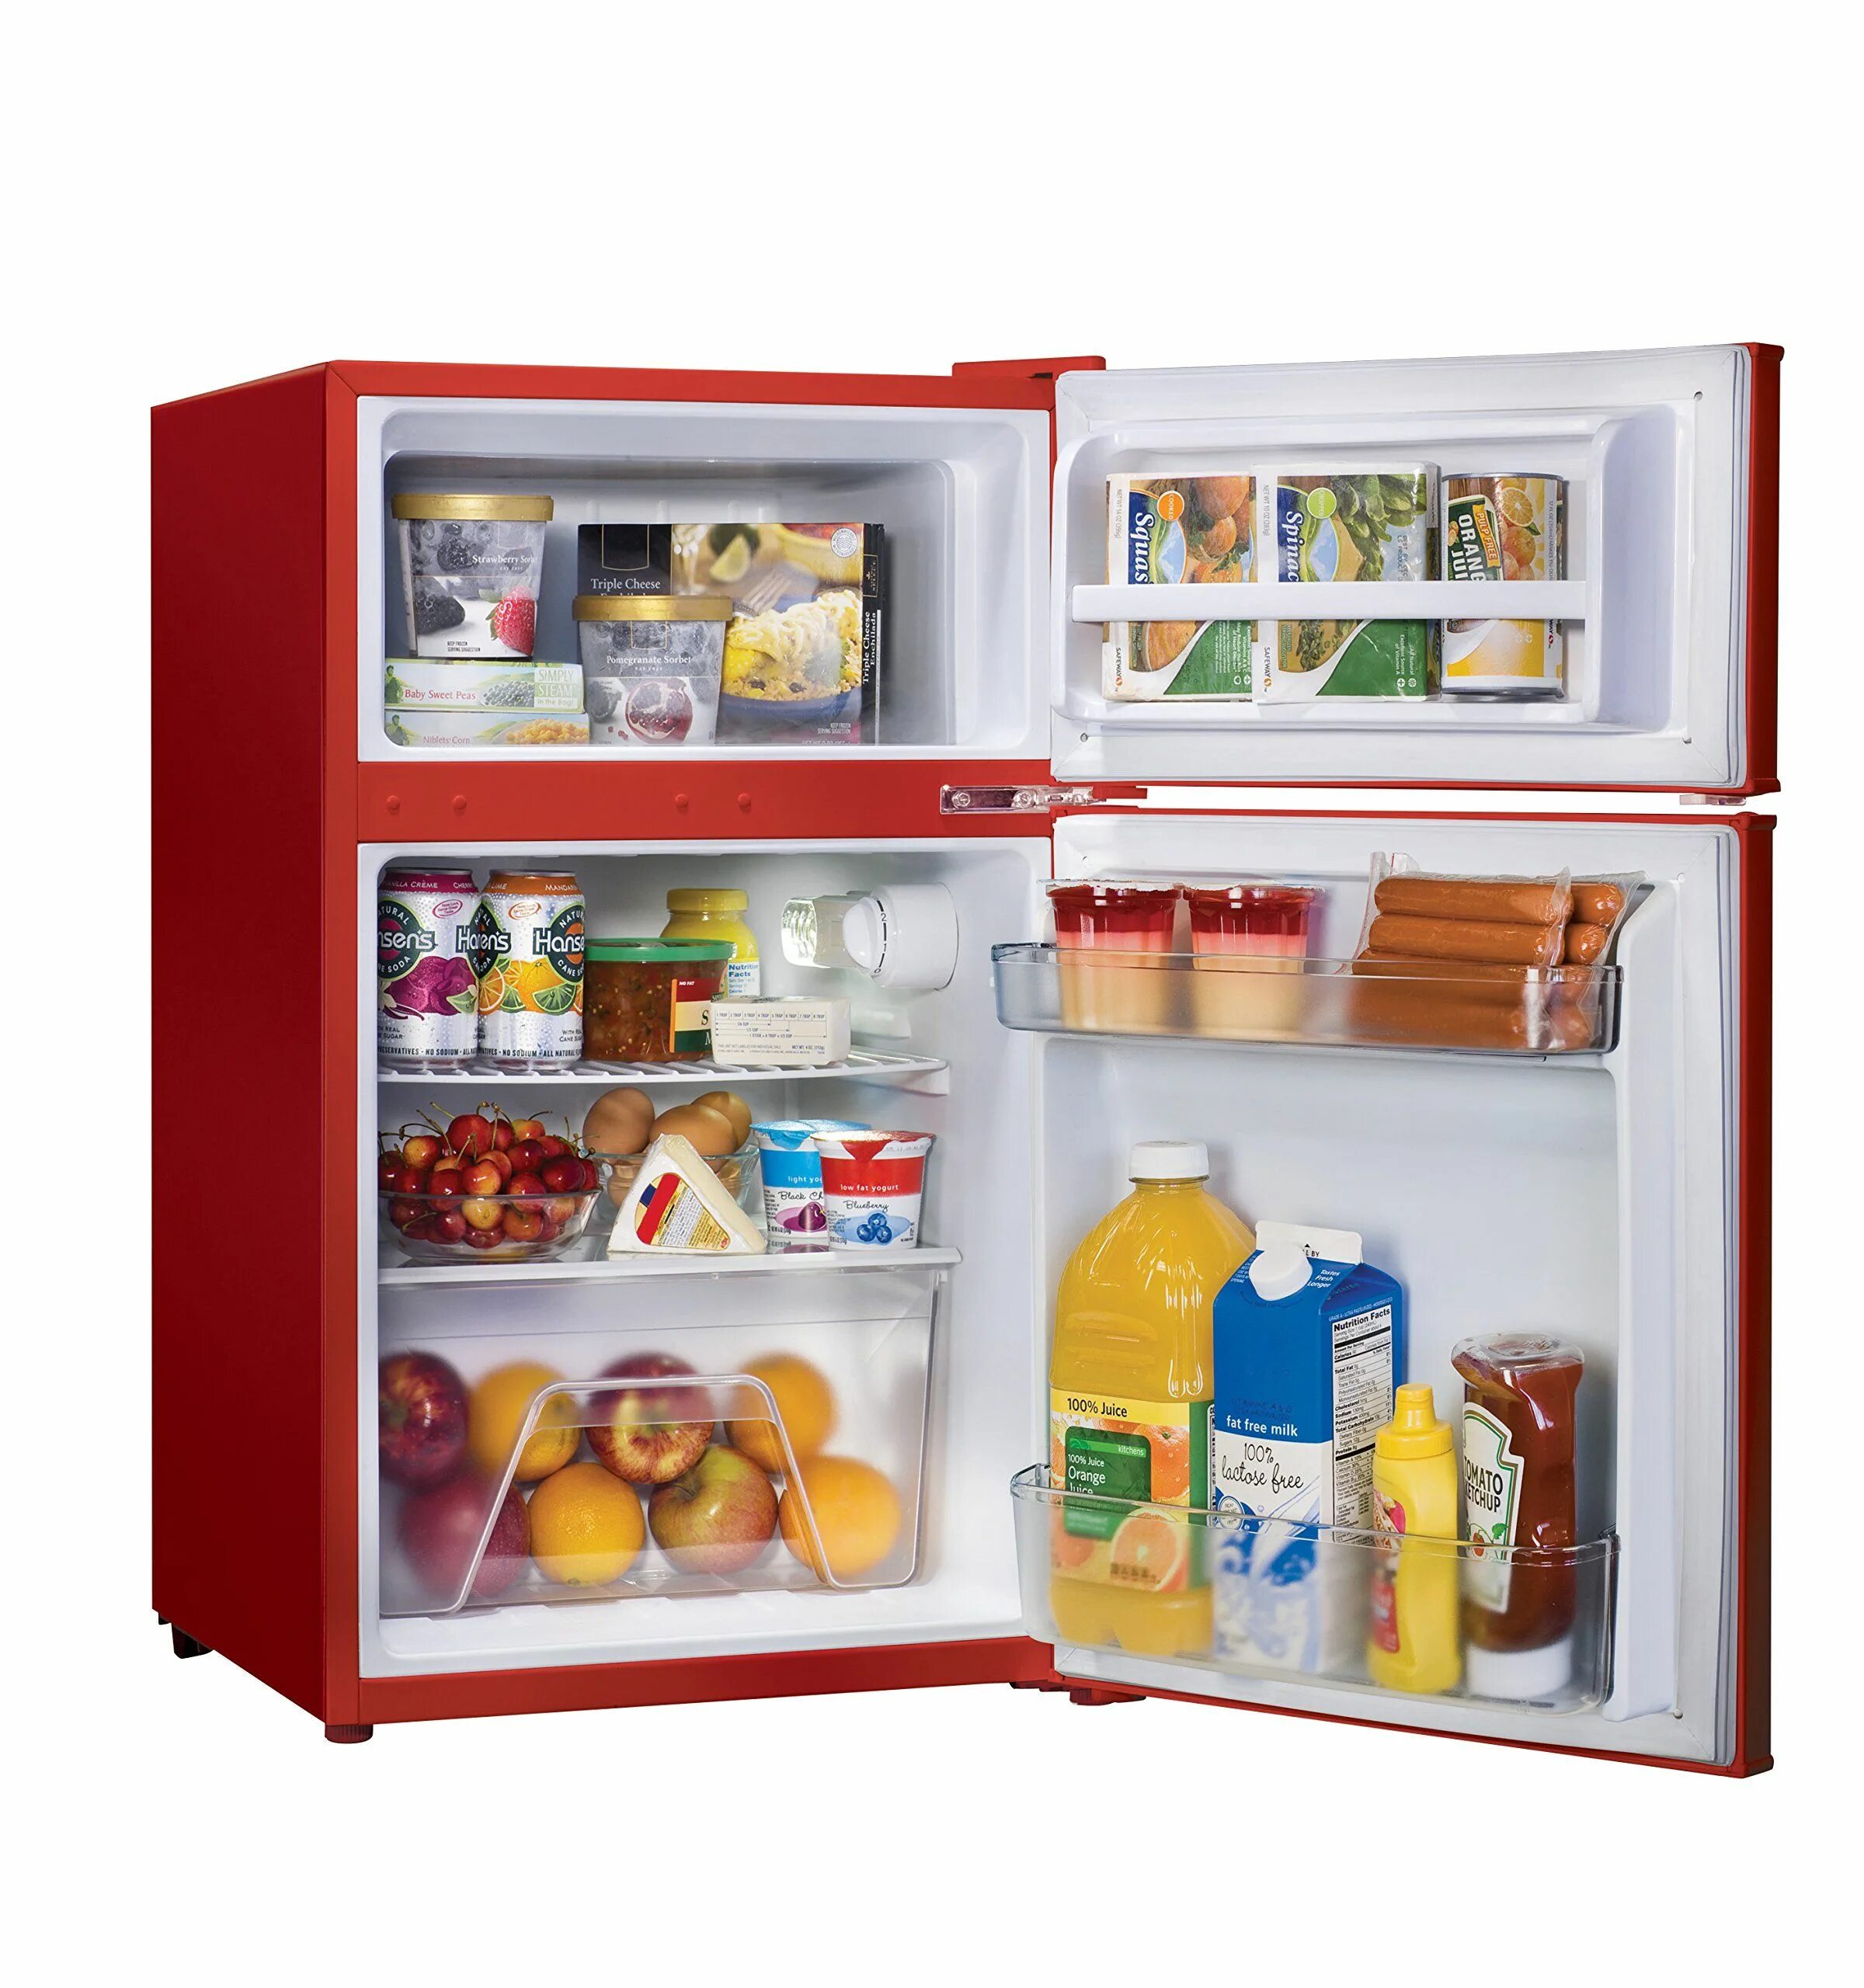 Холодильники аска. Холодильник с продуктами. Холодильник с продуктами для детей. Открытый холодильник. Открытый холодильник с продуктами.